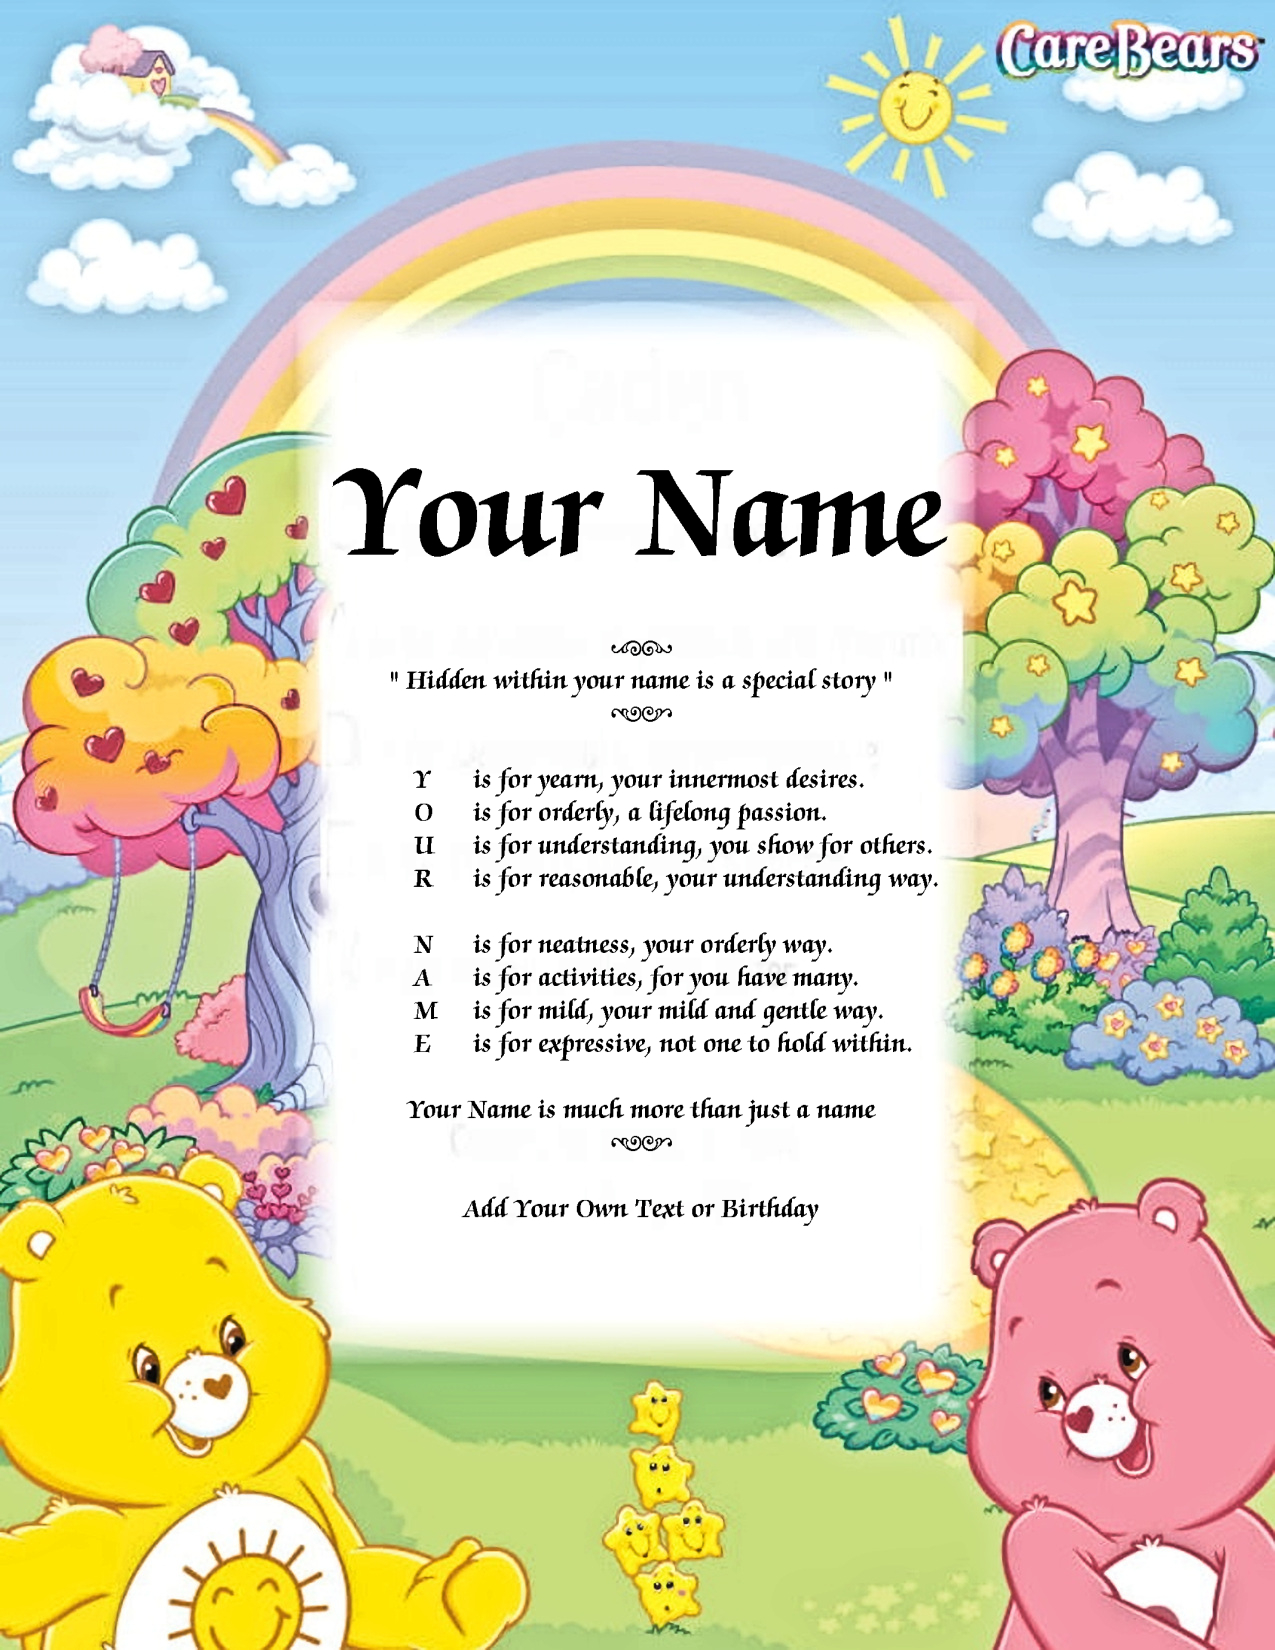 Care Bears Playground Child Name Poem Story